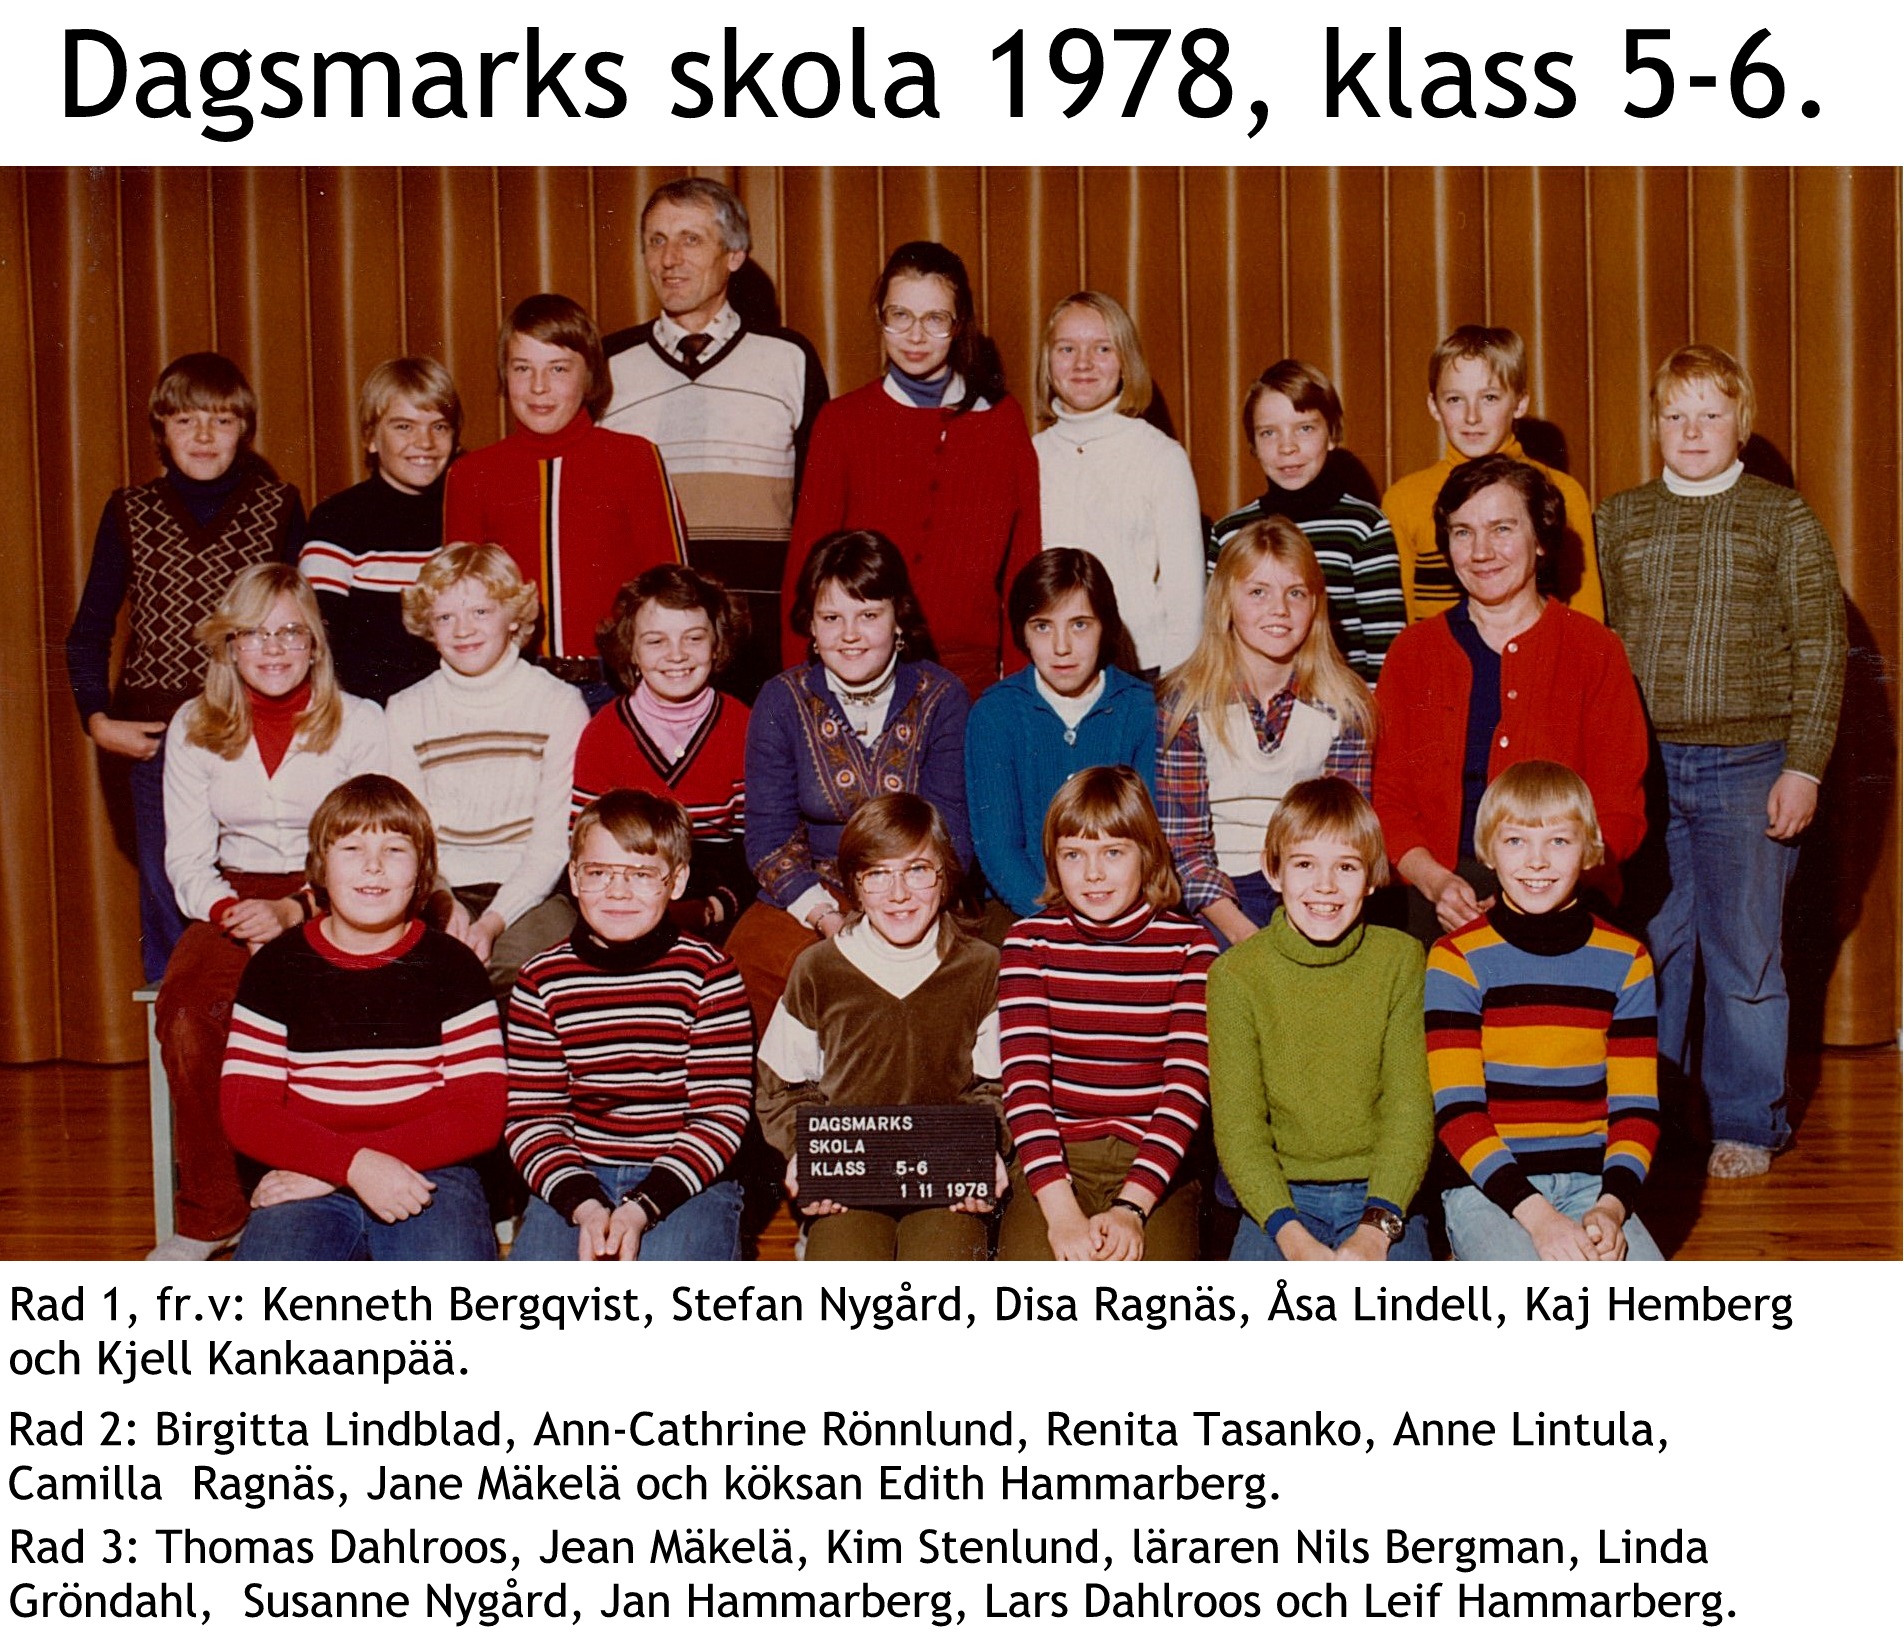 1978 Dagsmark skola klasserna 5-6